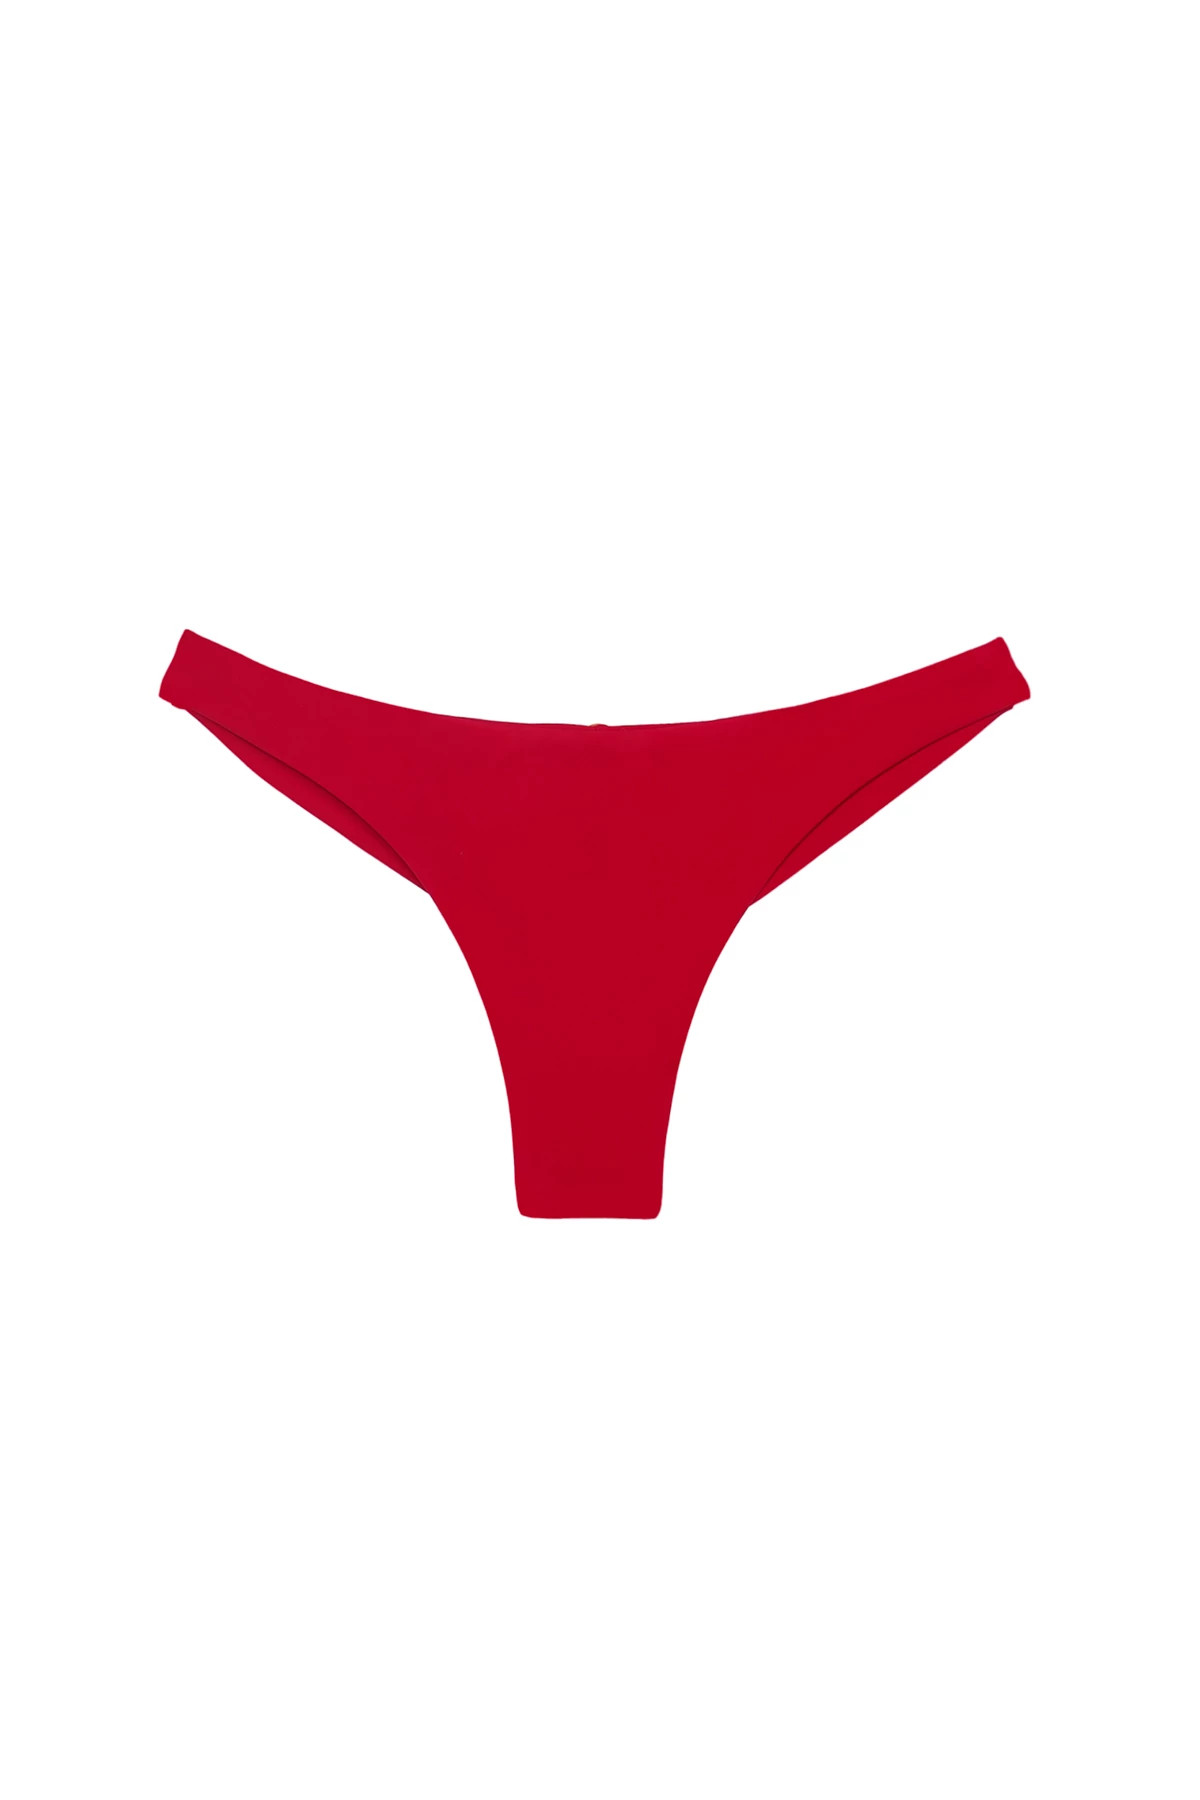 AMBRA RED Seamless Brazilian Bikini Bottom image number 3